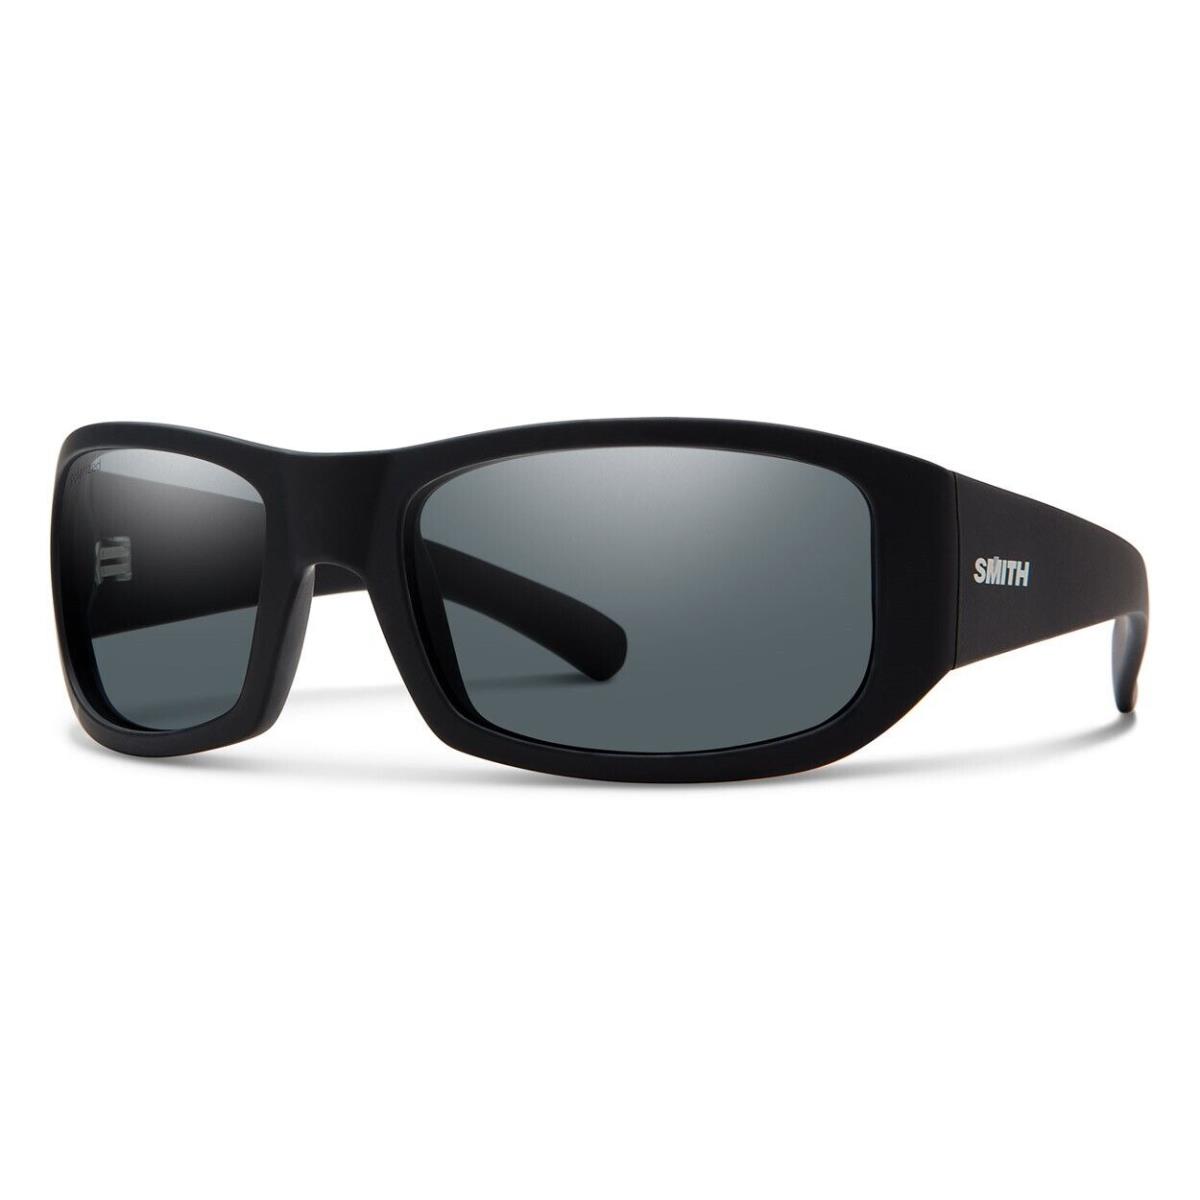 Smith Bauhaus Sunglasses Matte Black Frame Polarized Gray Lens